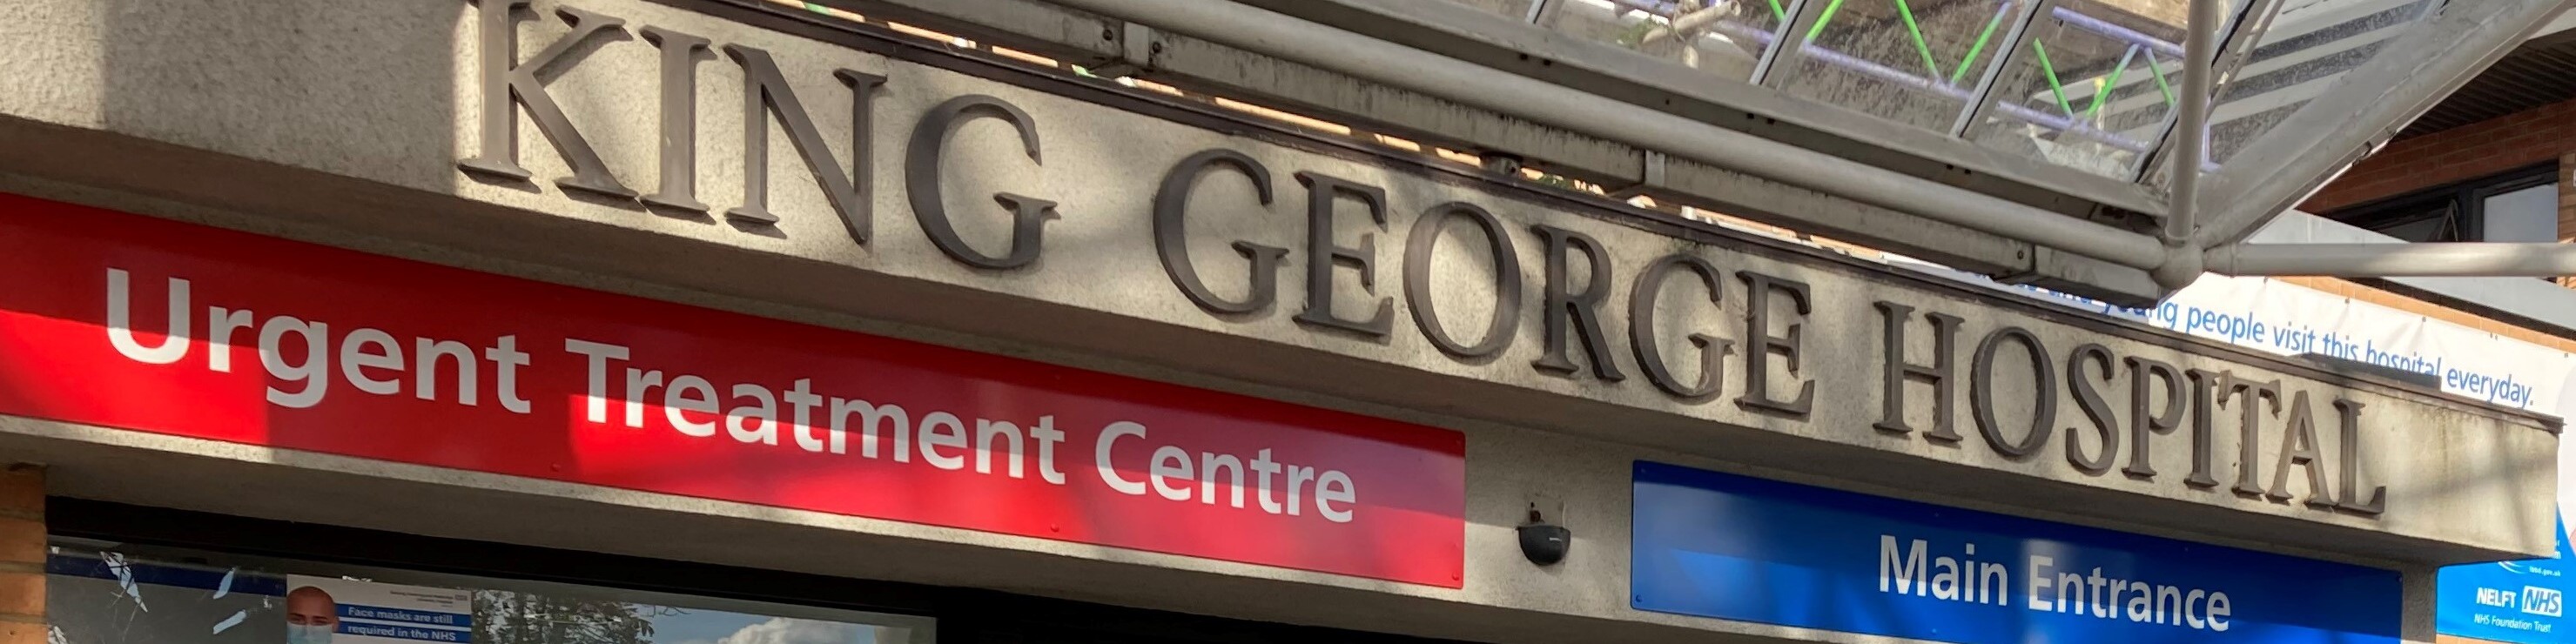 King George Hospital main entrance